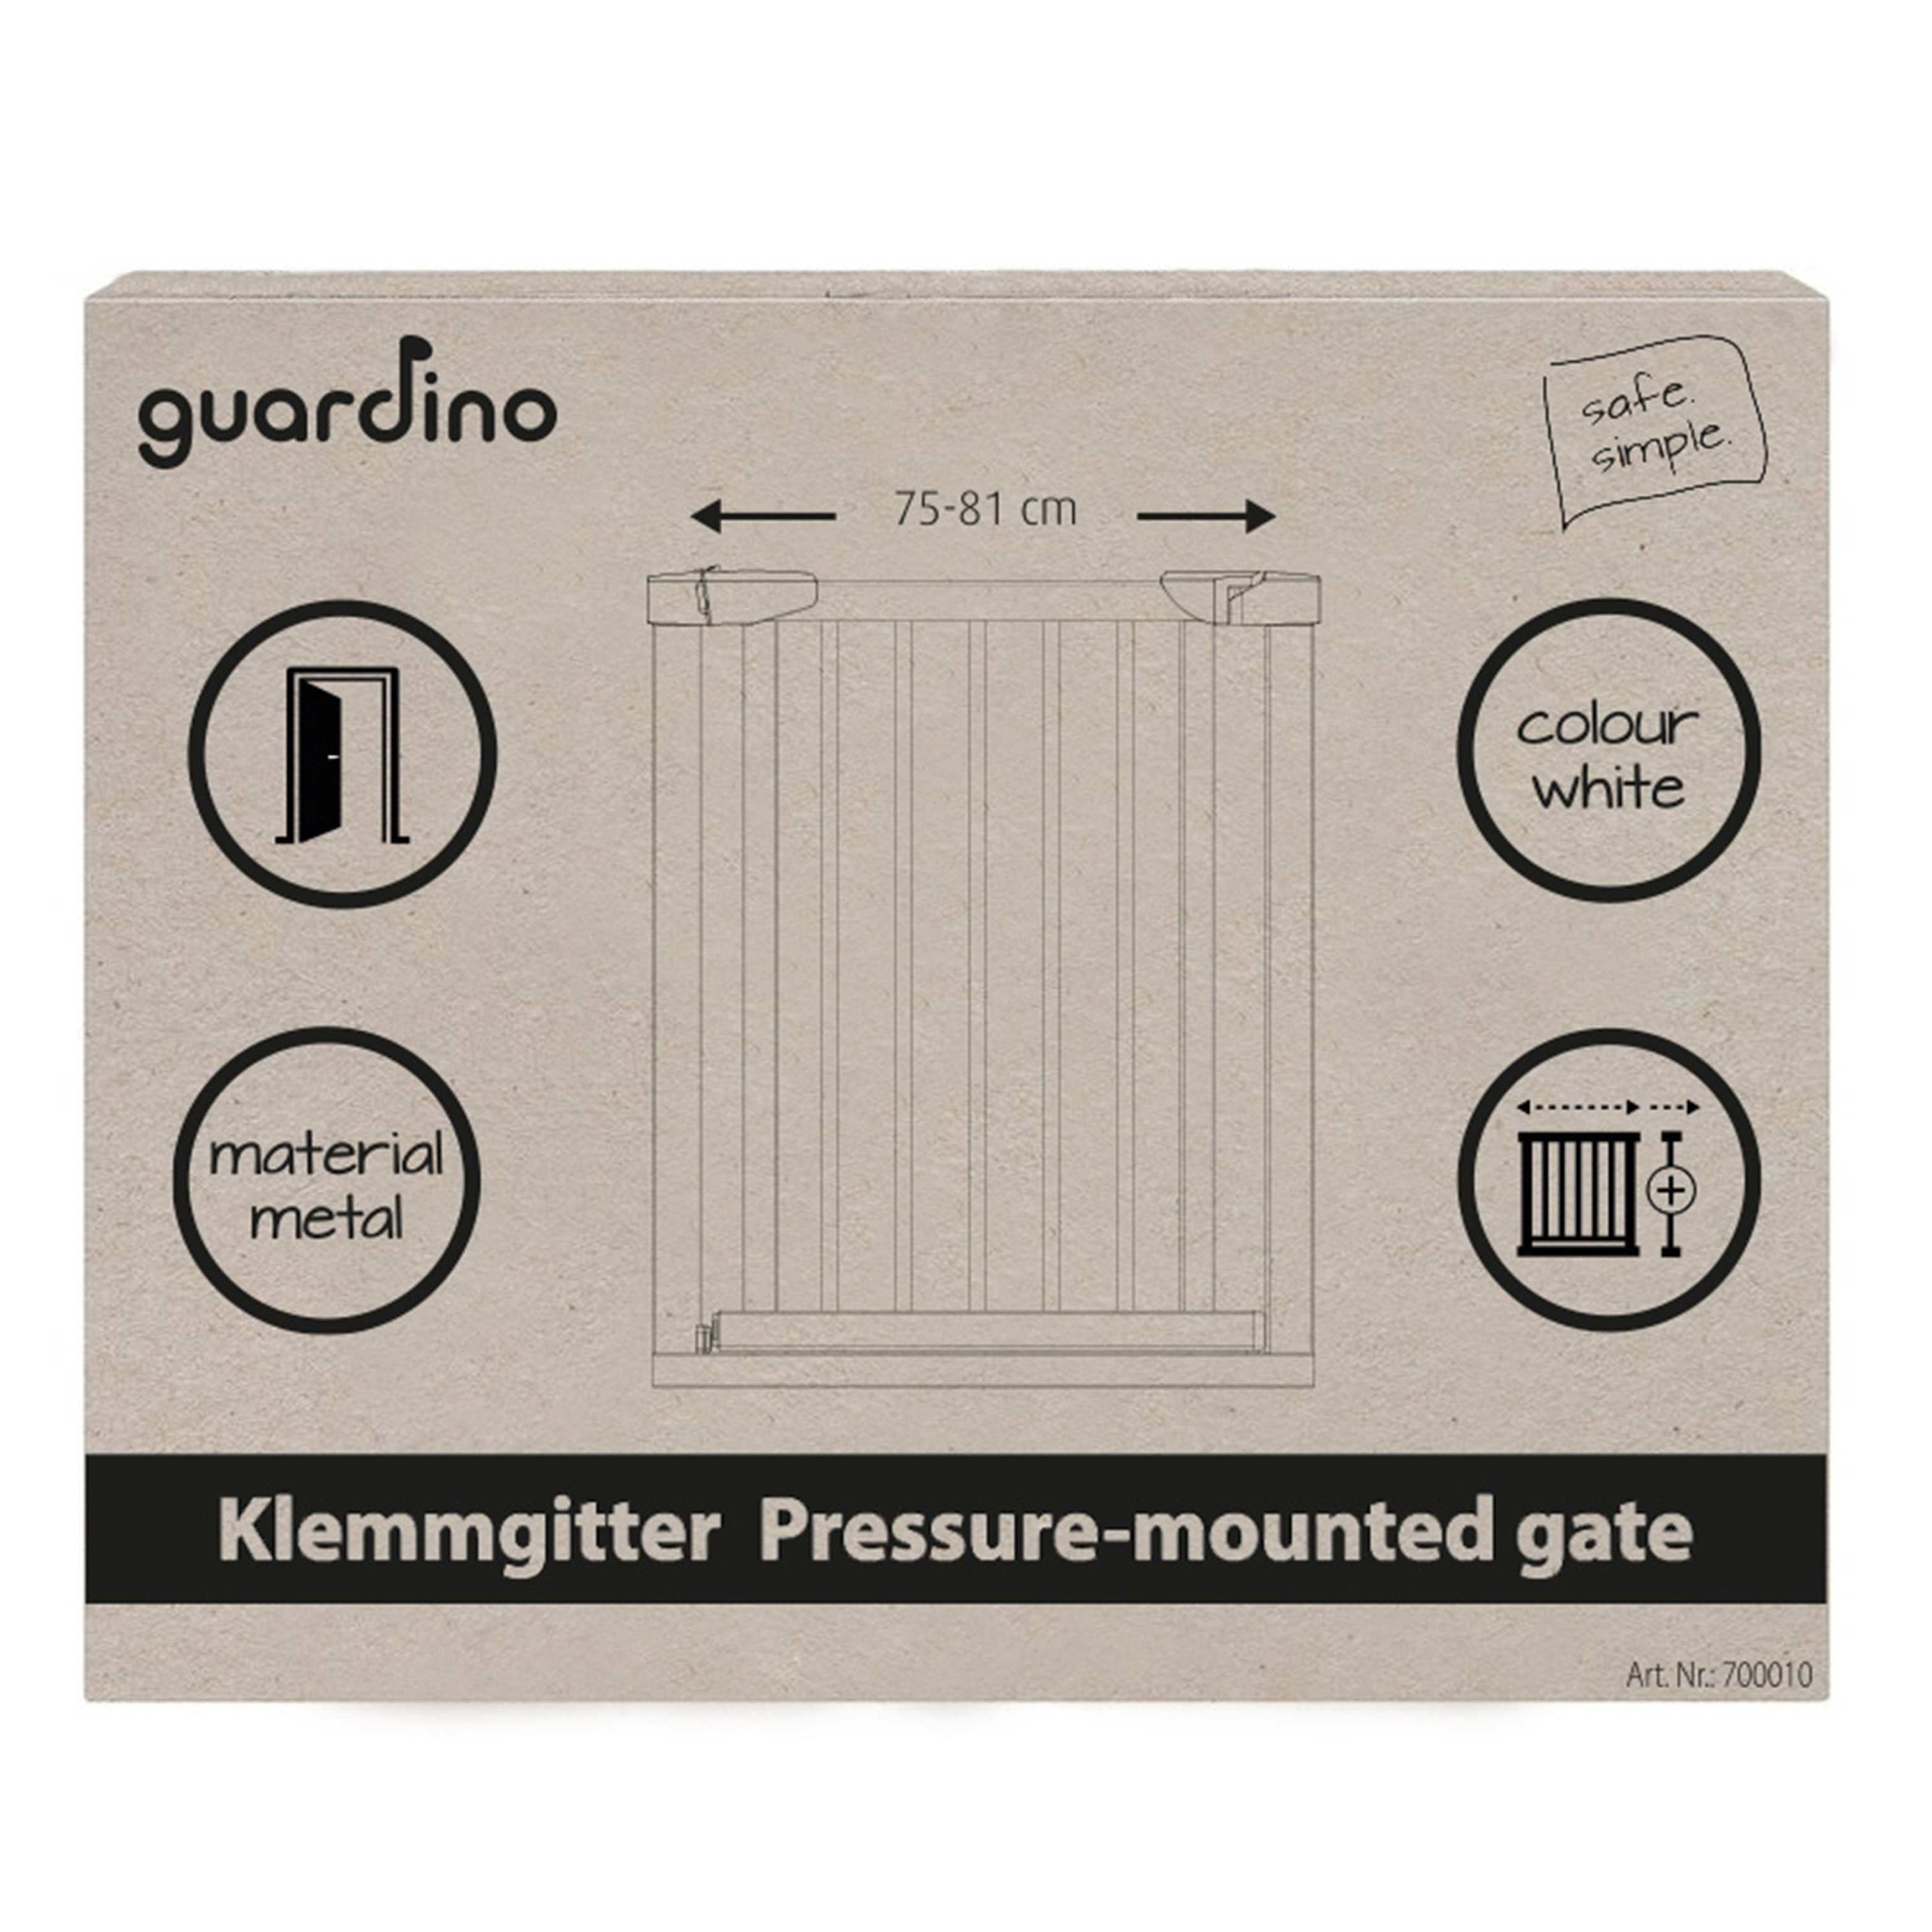 Guardino Türschutzgitter mit 2x 7cm Verlängerung, 89-95 cm, Treppenschutzgitter ohne Bohren